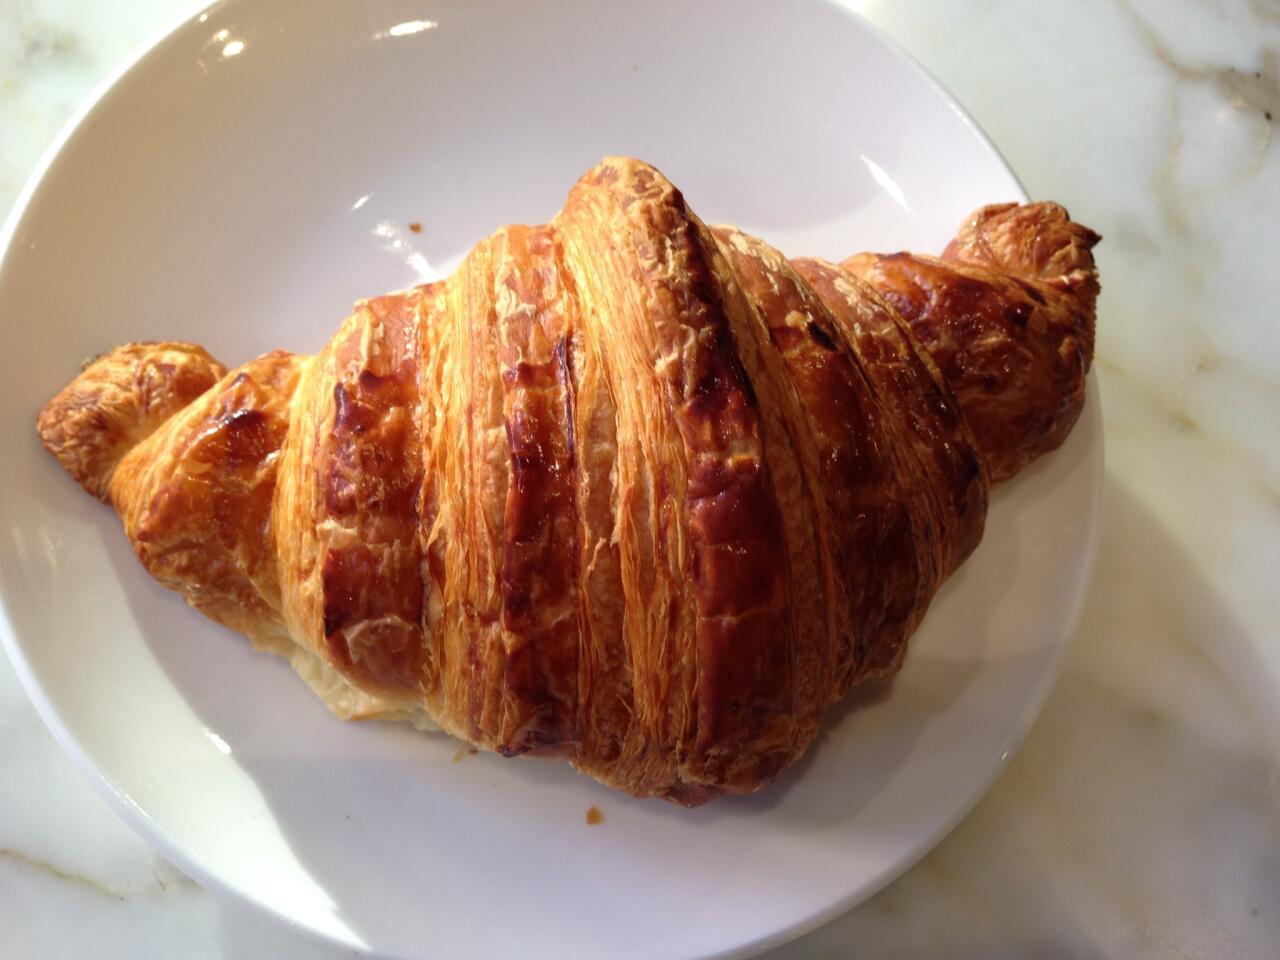 Croissant at b. patisserie